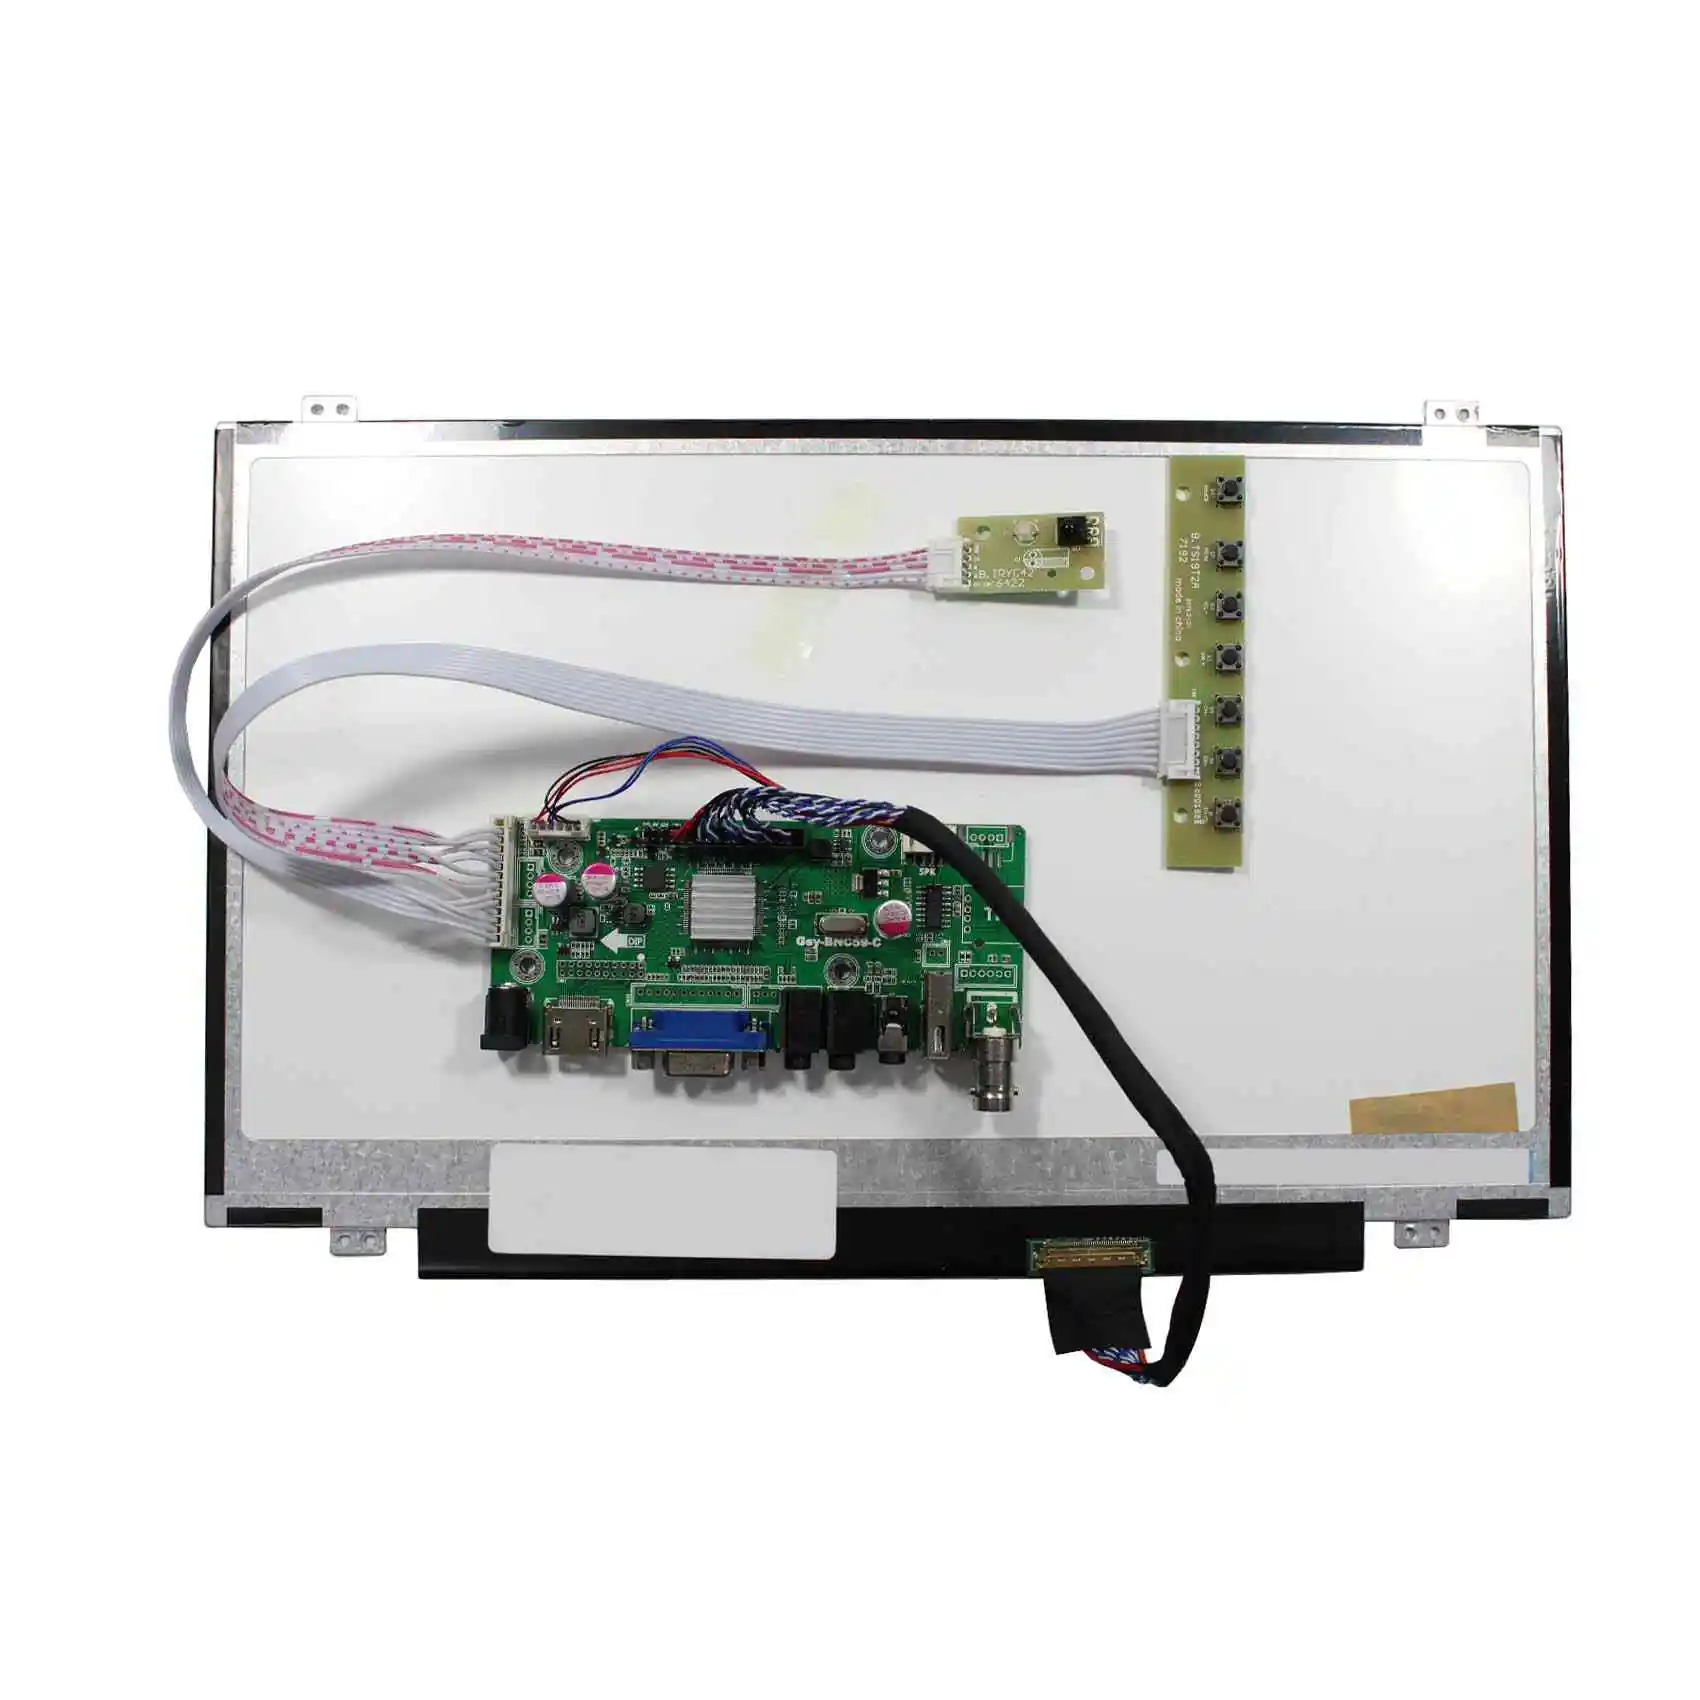 HDMI VGA 2AV USB Audio LCD Controller Board for 15.6" B156HW01 1920x1080 LCD